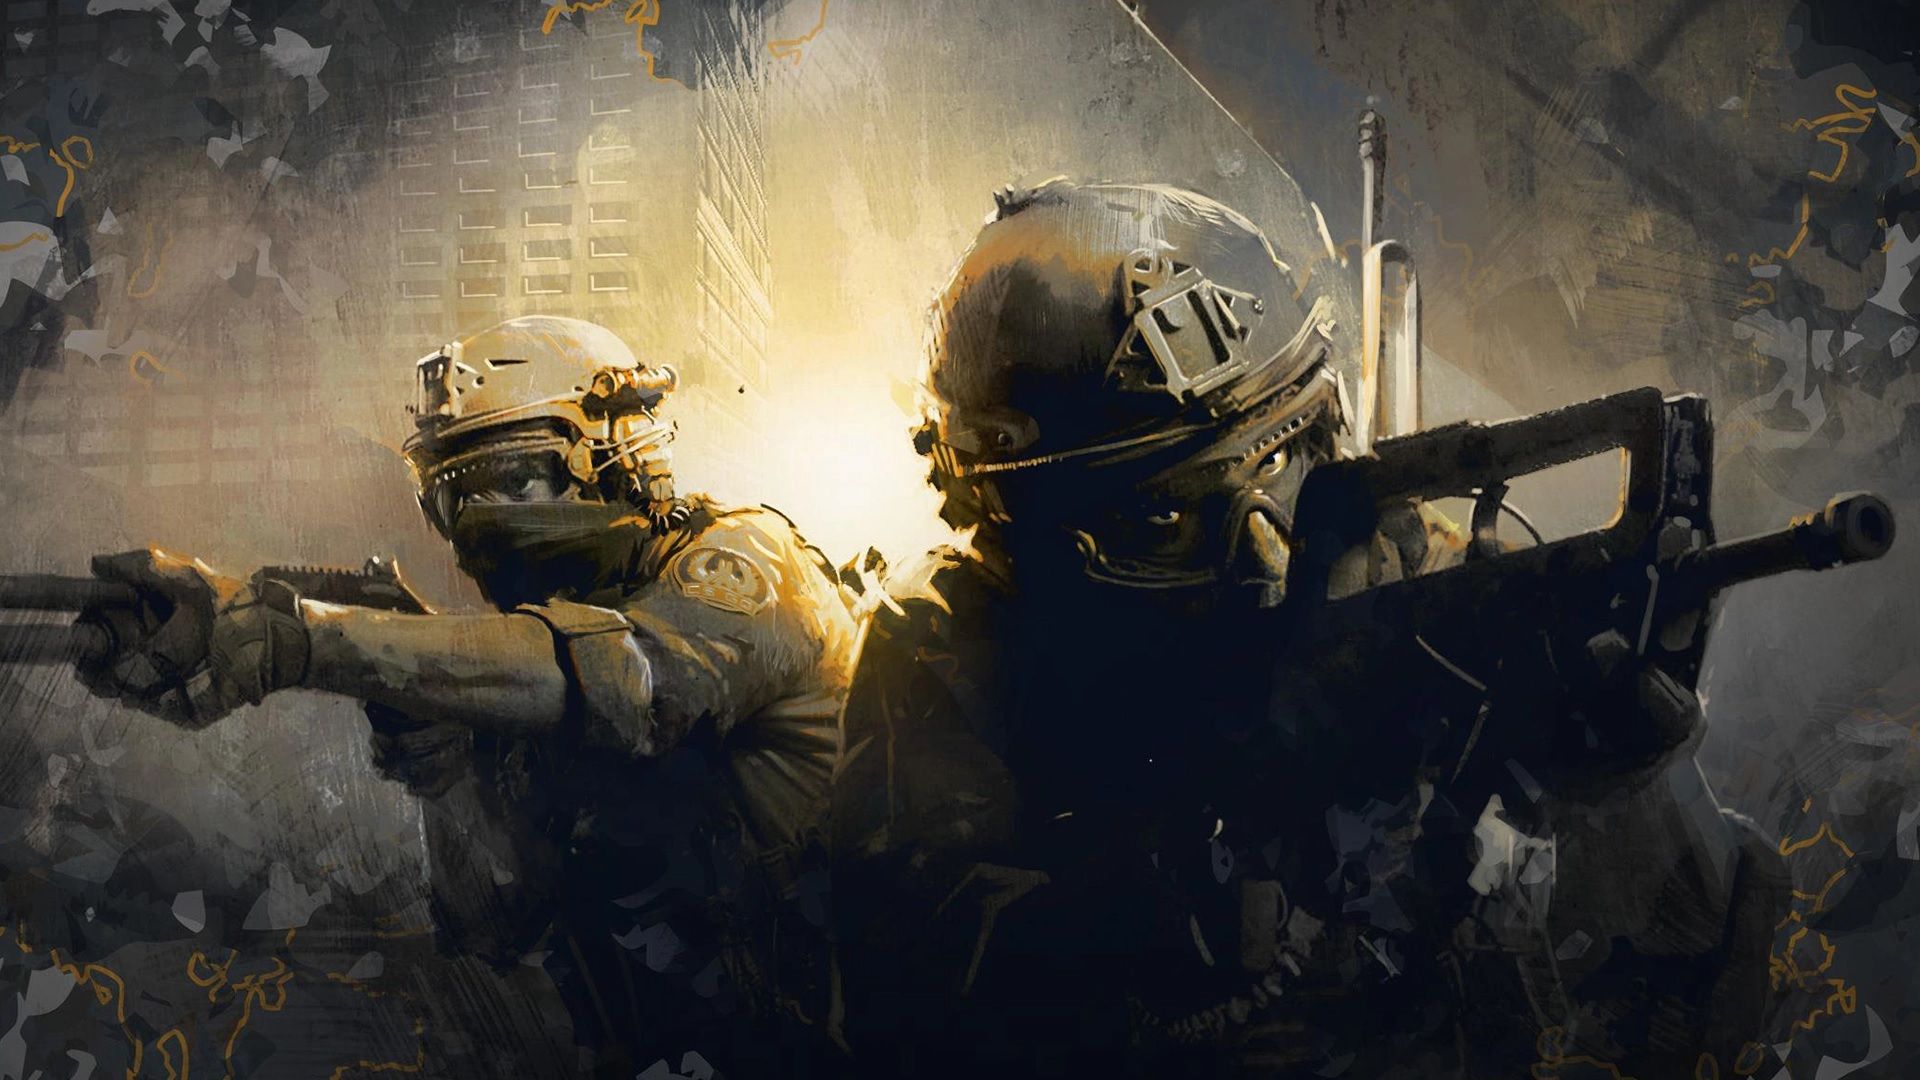 CS:GO Wallpapers - Top 35 Best Counter Strike Backgrounds Download